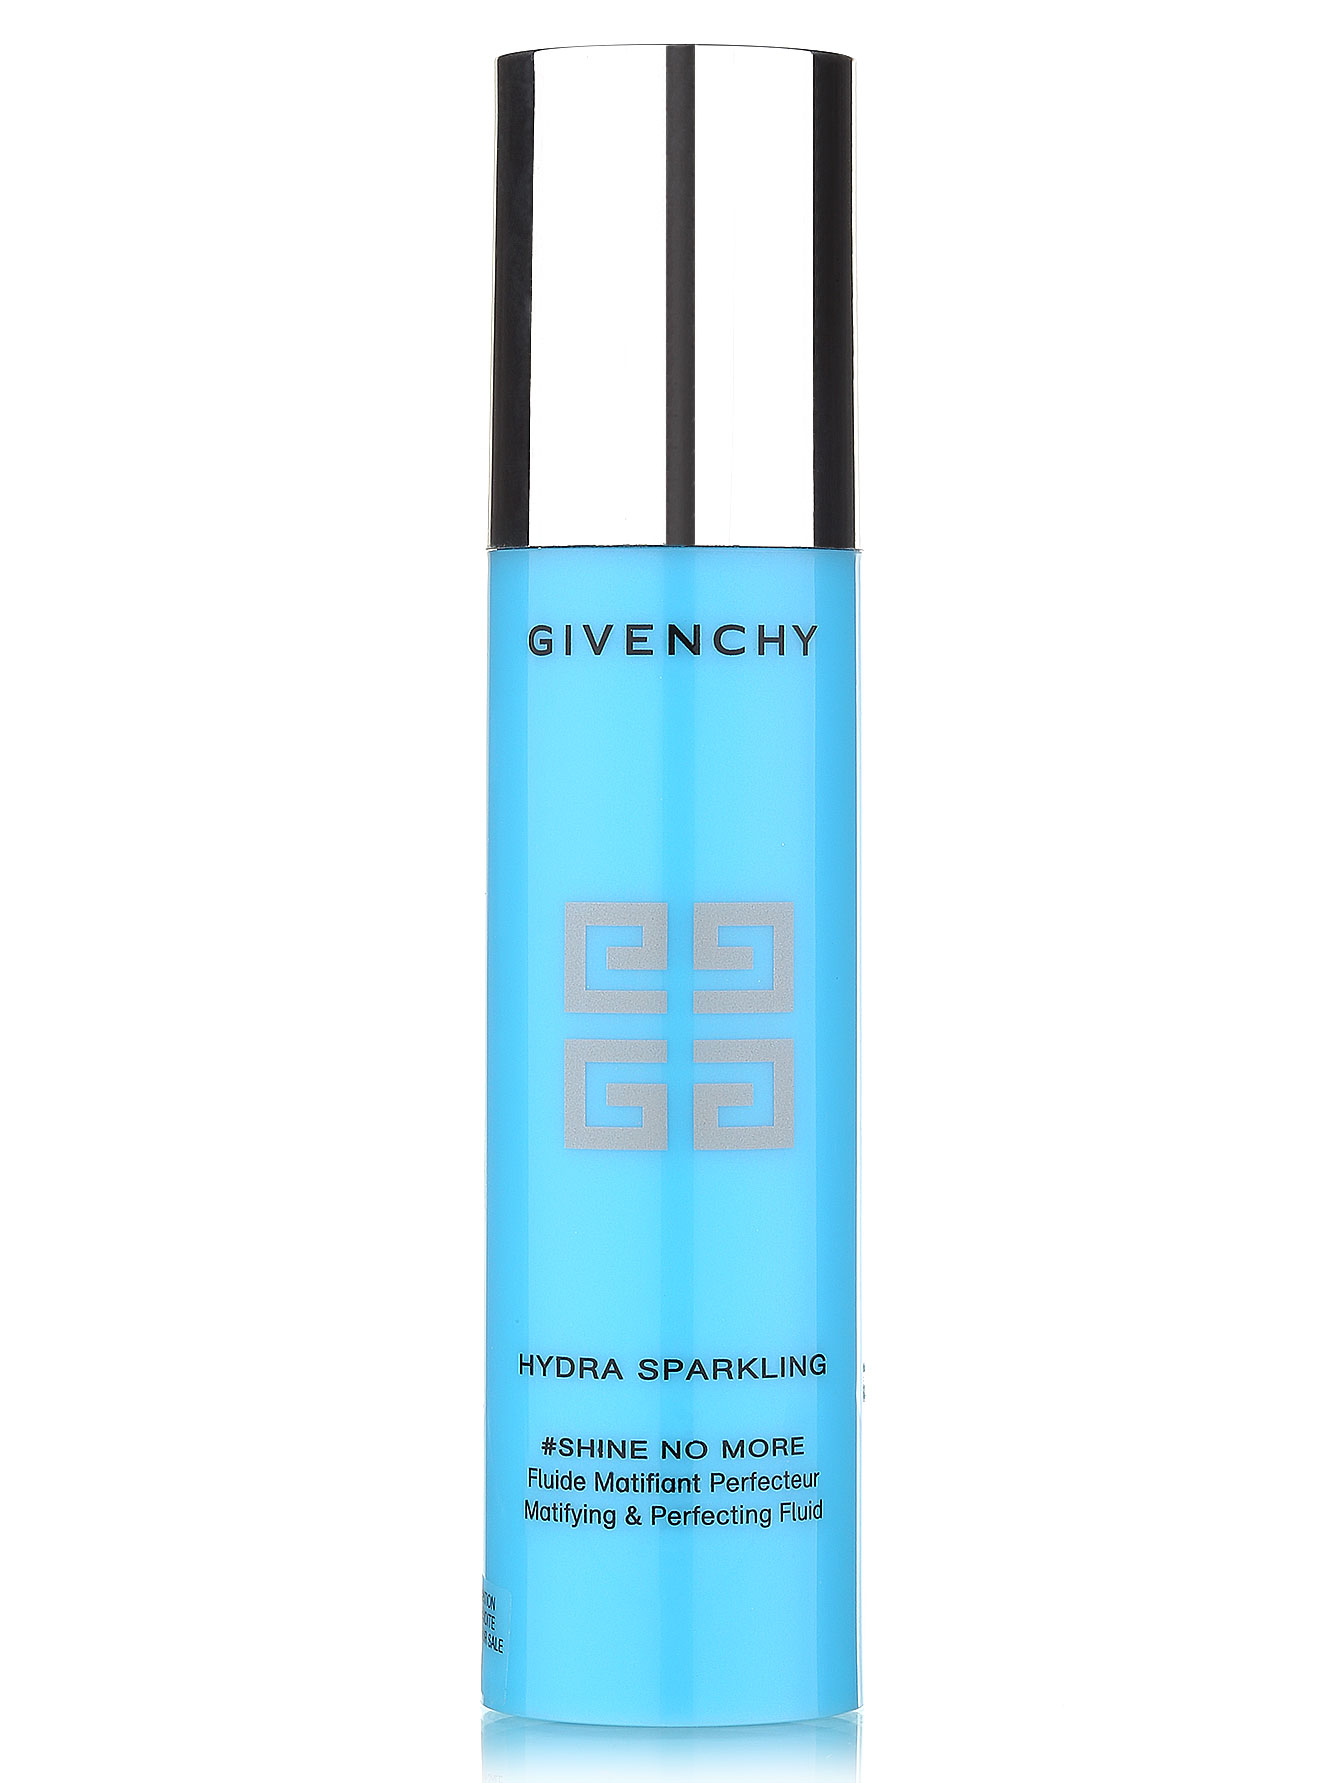 Givenchy hydra sparkling fluide matifiant perfecteur браузер тор сайты с телефонами гидра